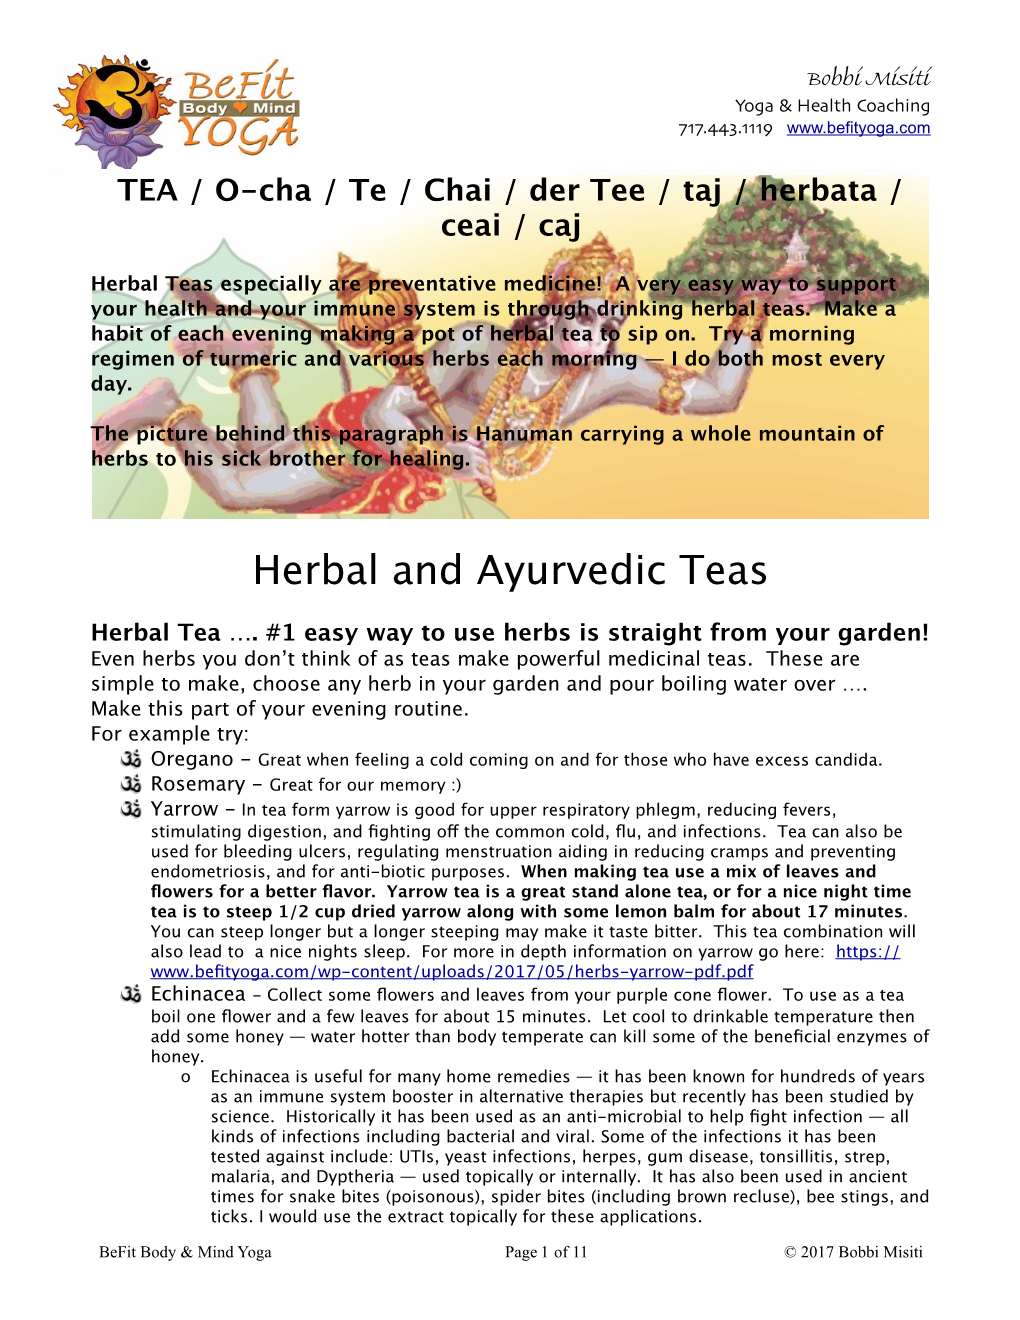 Herbal and Ayurvedic Teas